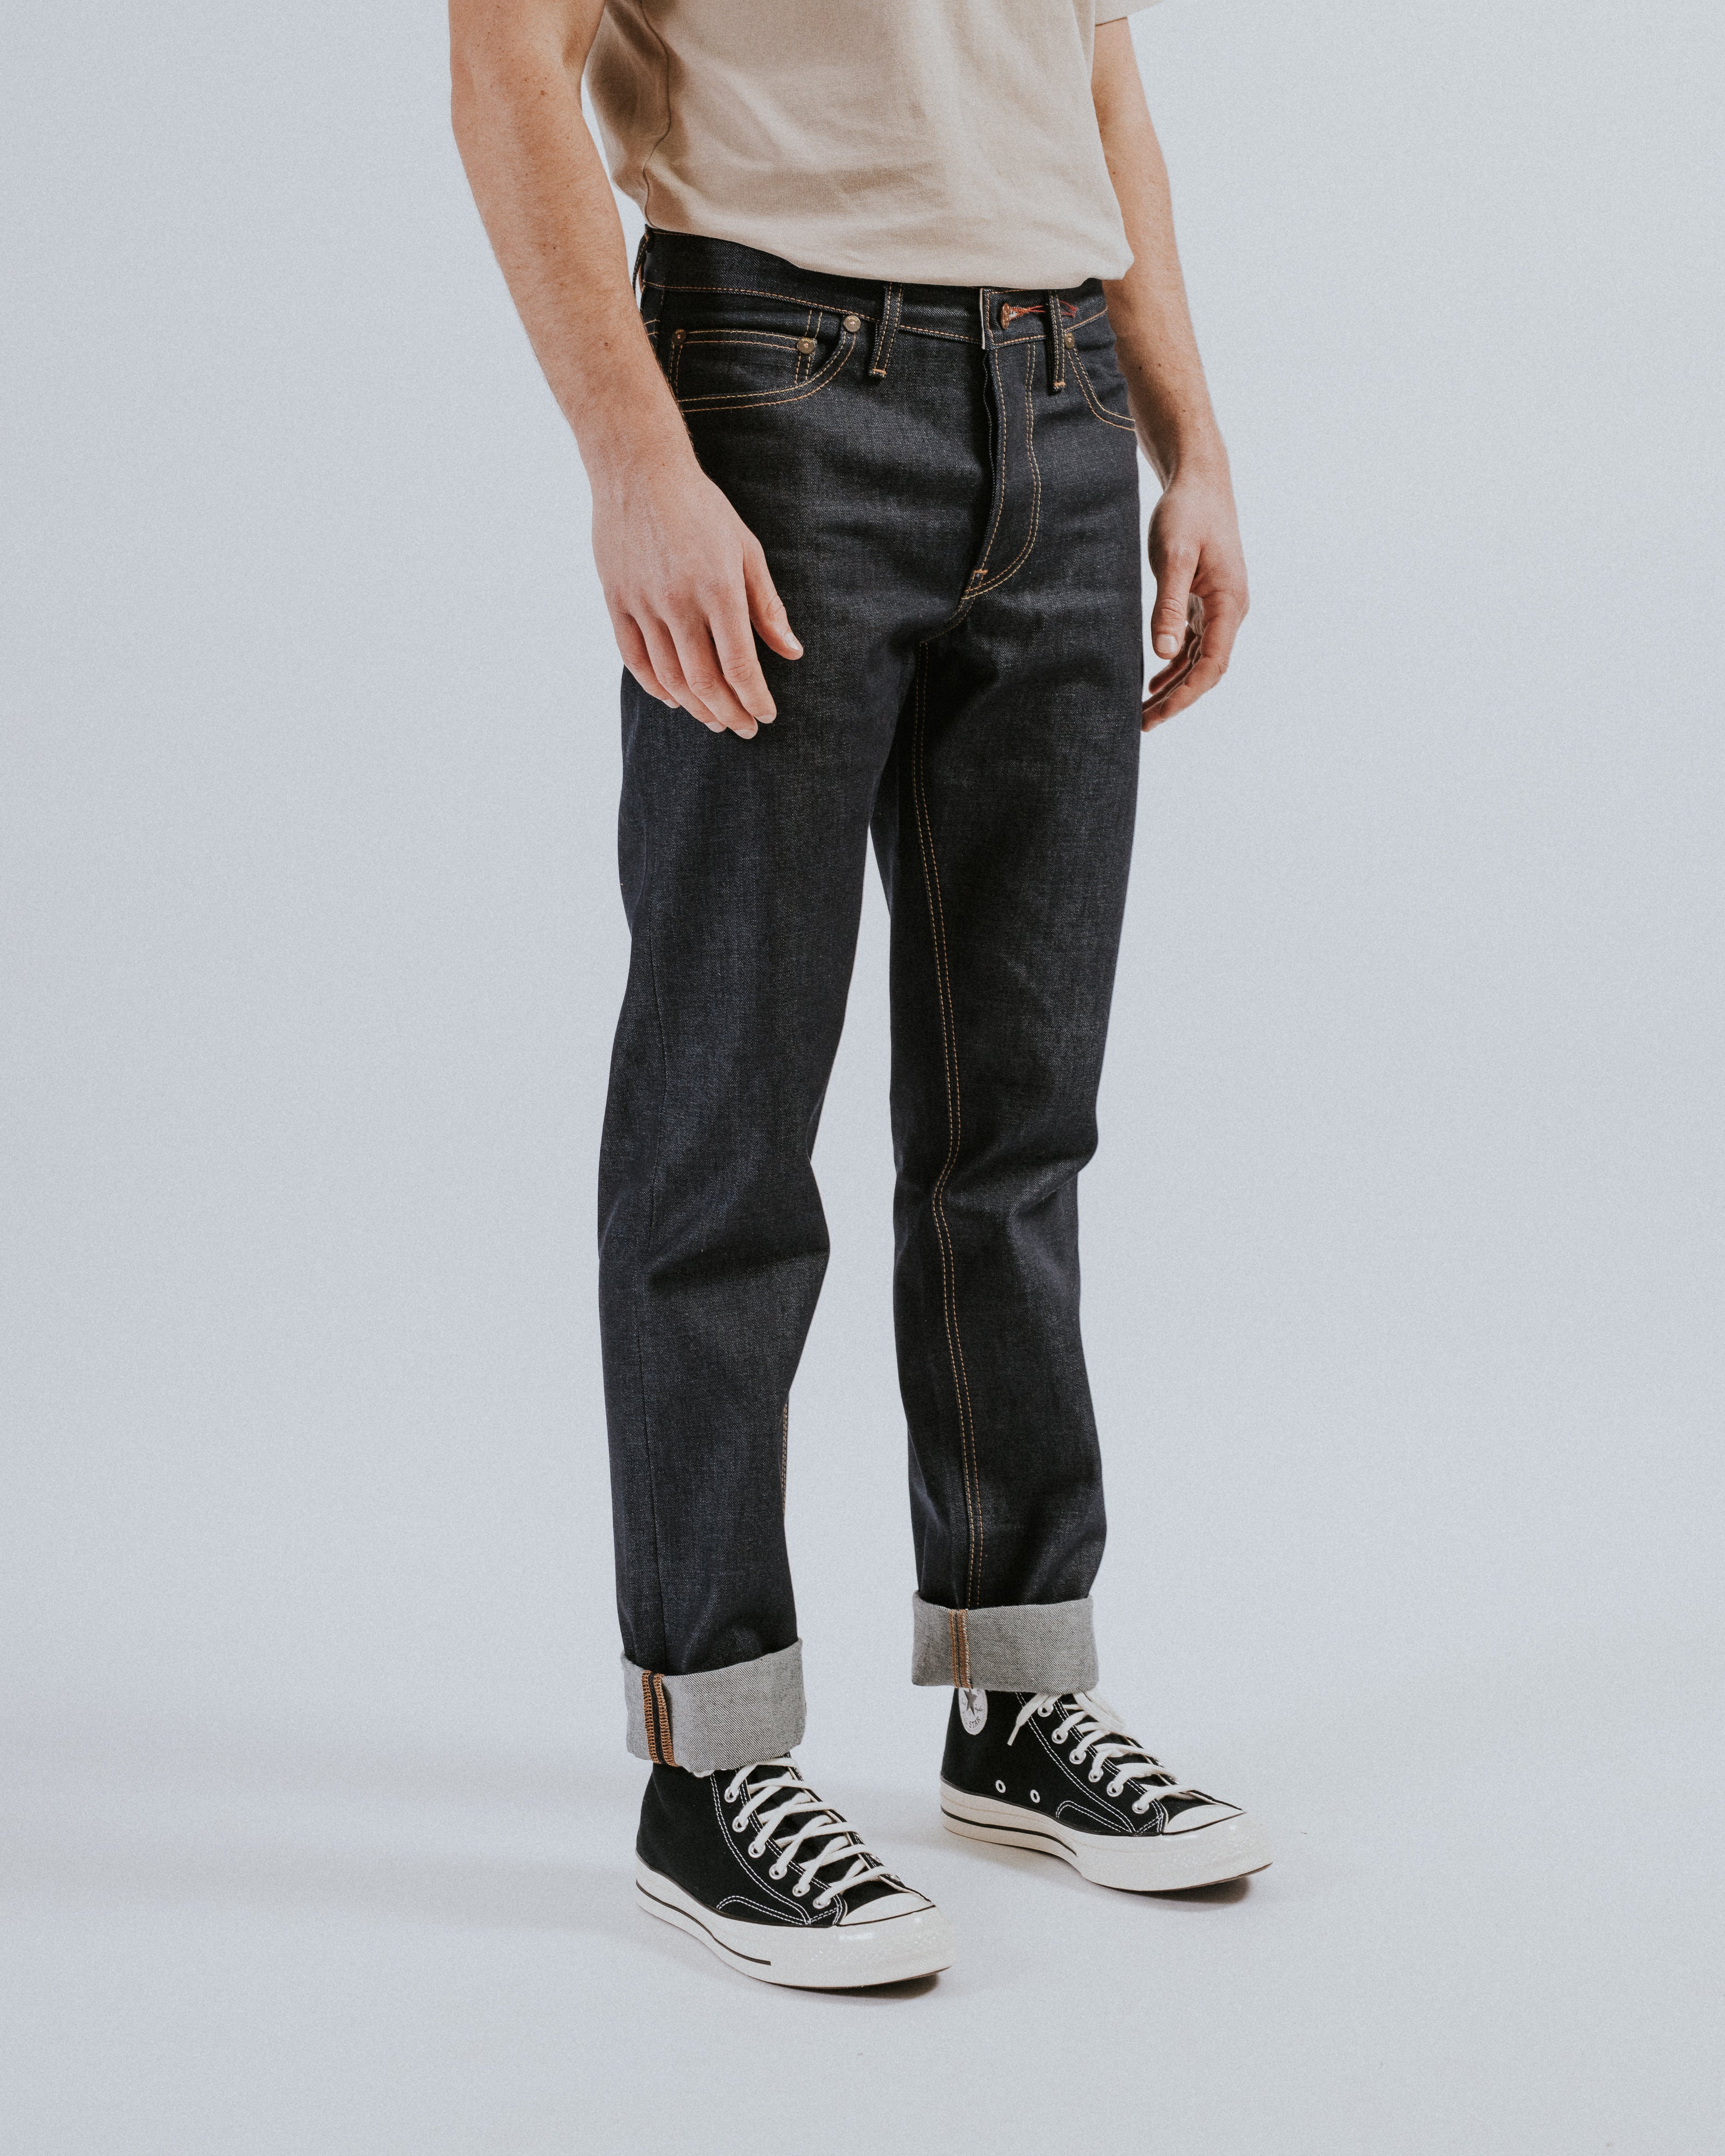 Custom Made By Hand Men's Skinny Jeans | Williamsburg Garment Co.